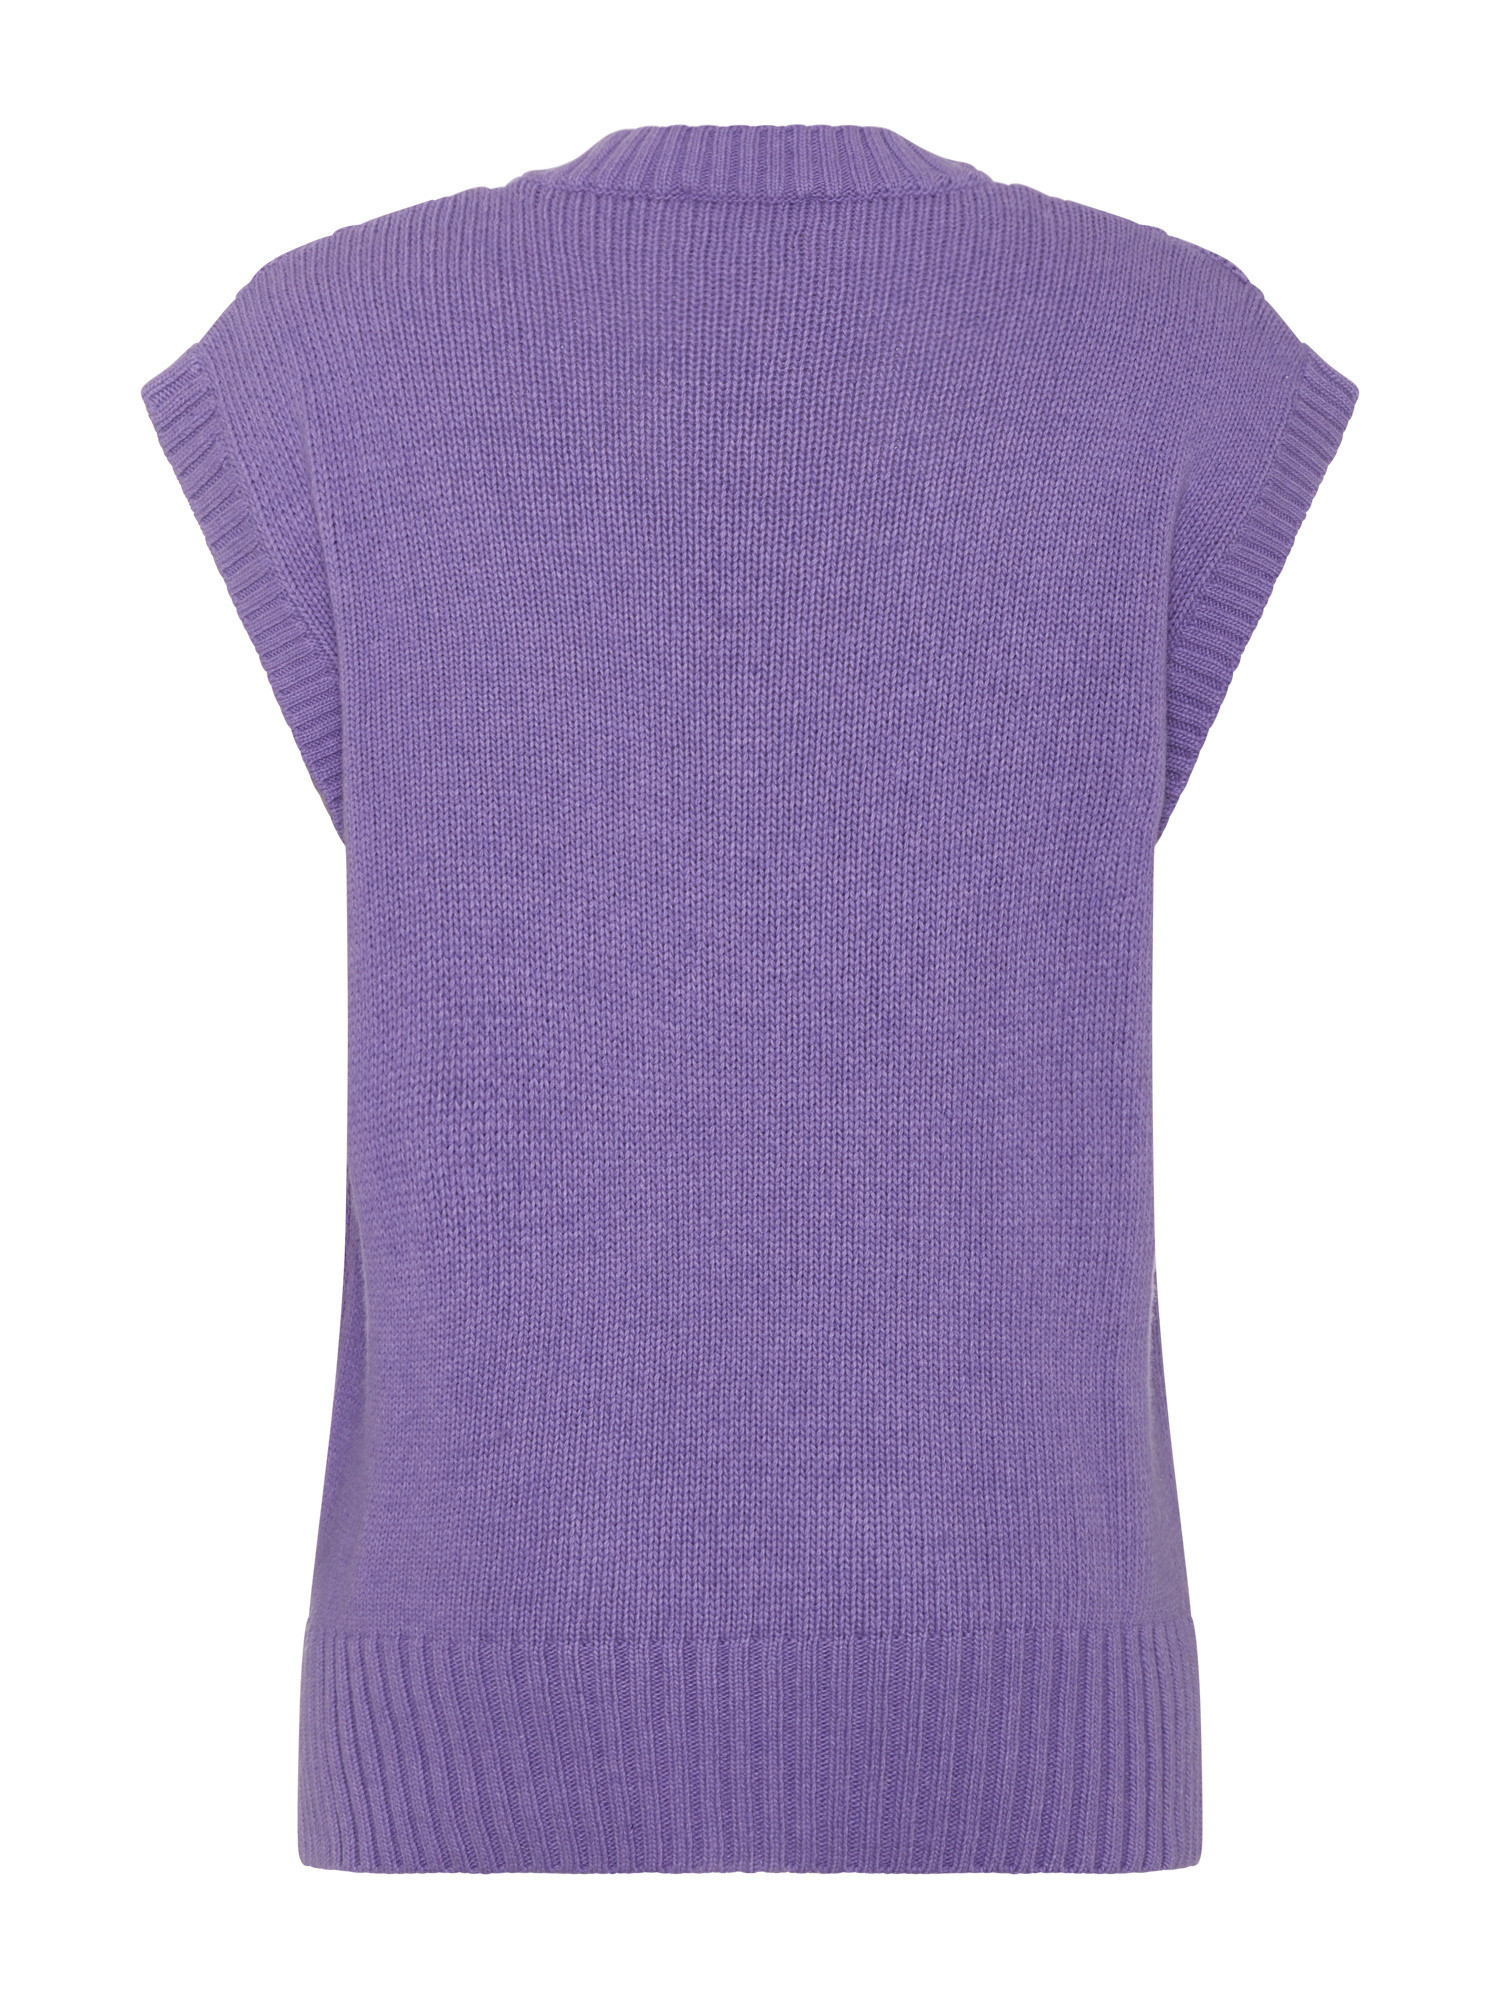 Koan - V-neck vest with diamond pattern, Purple Lilac, large image number 1